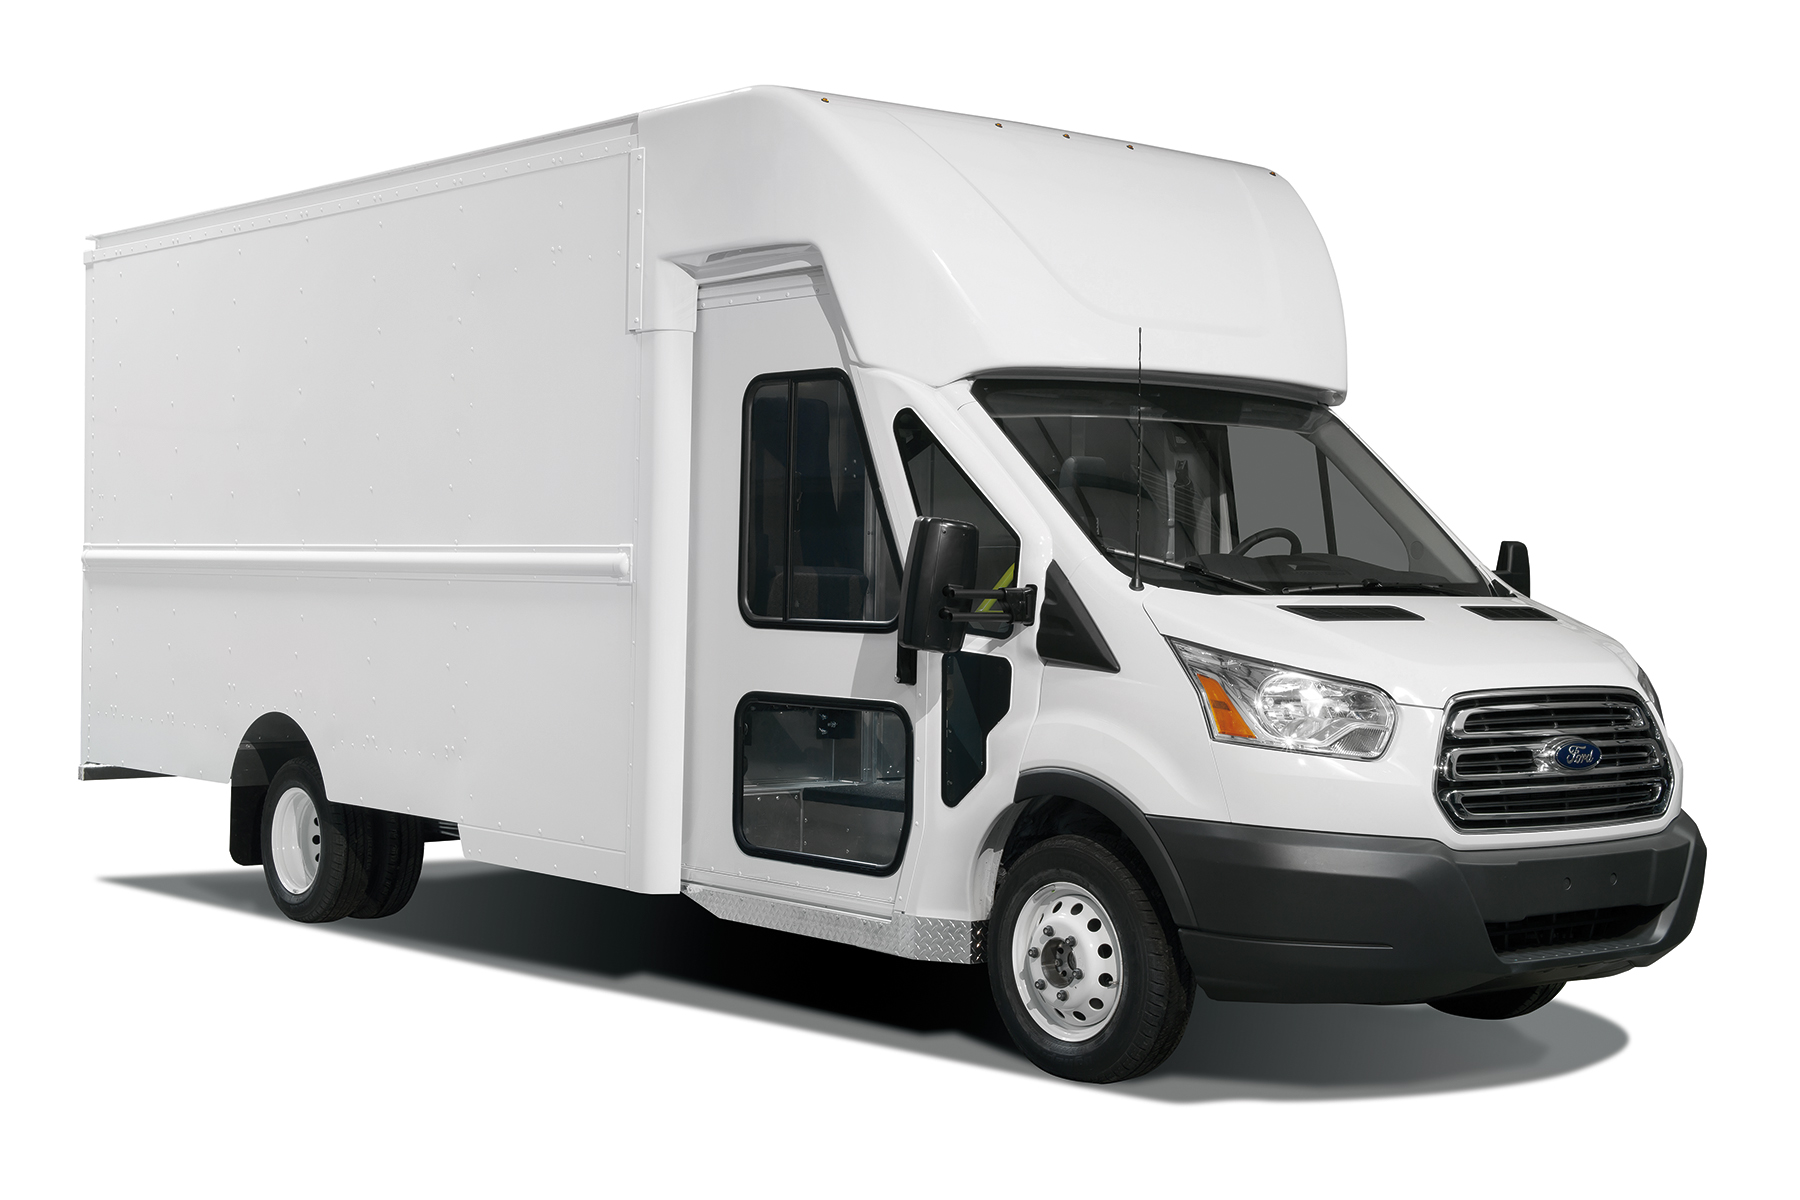 Купить форд транзит грузовой. Ford Transit v184 фургон. Ford Transit 2018 грузовой фургон. Ford Transit Cargo van. Ford Utilimaster Step van.